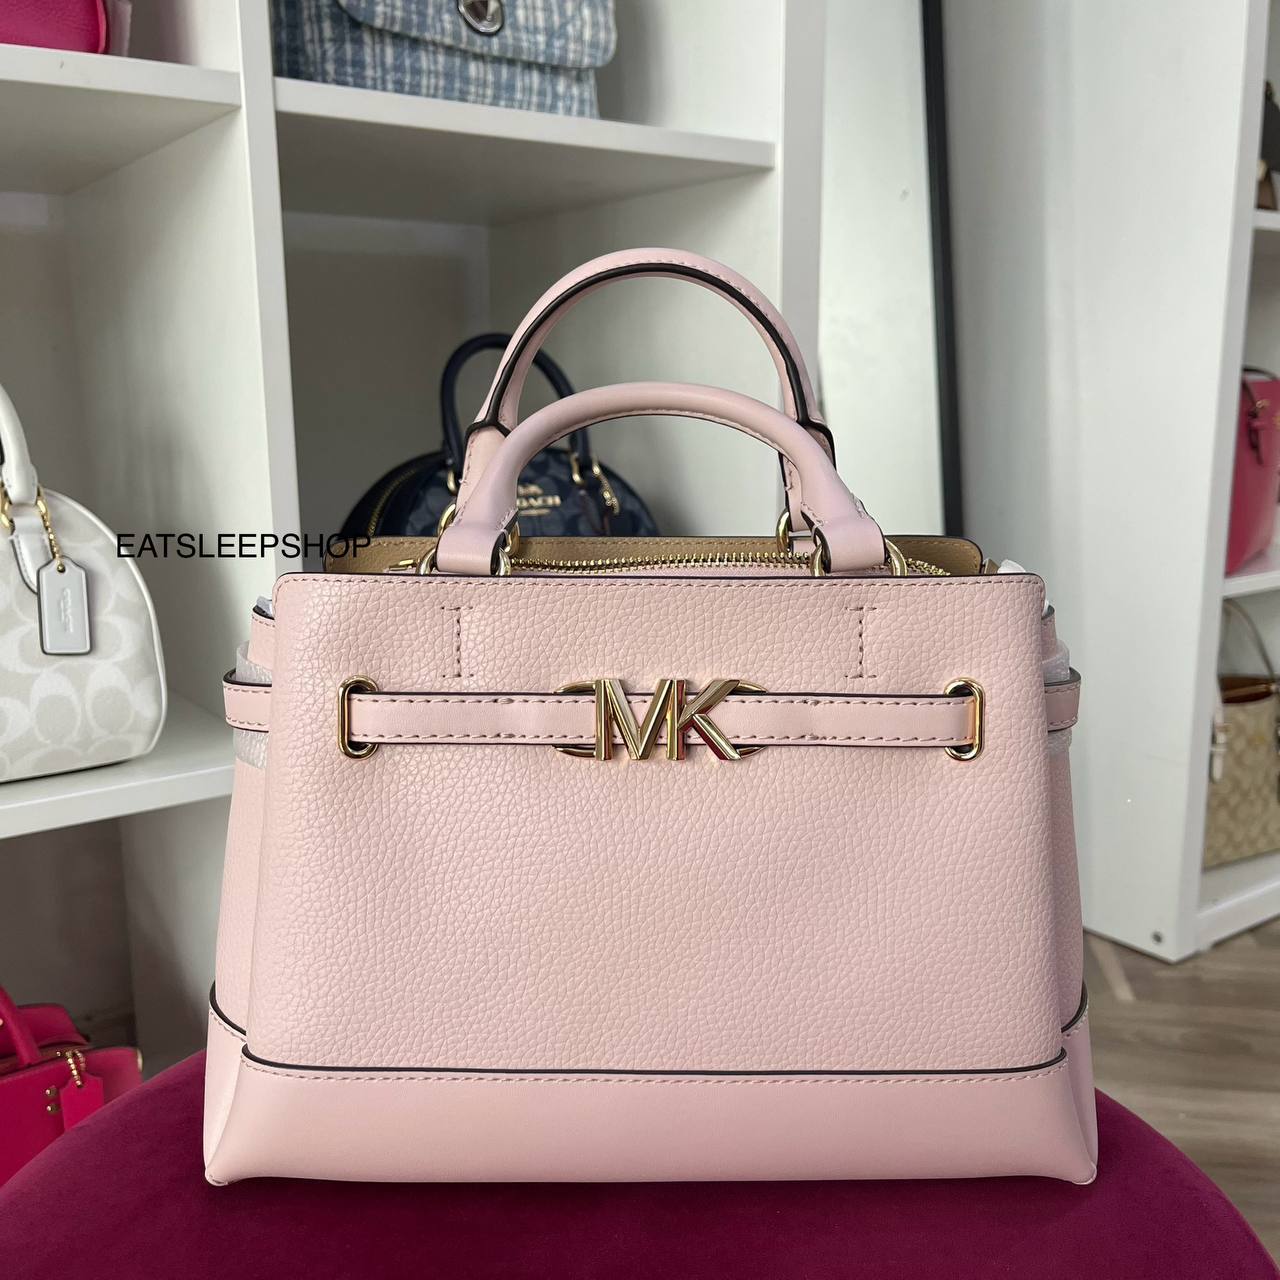 MICHAEL KORS Leather Purse Handbag Satchel Small, Cynthia Color-Tulip pink  EXC+ | eBay